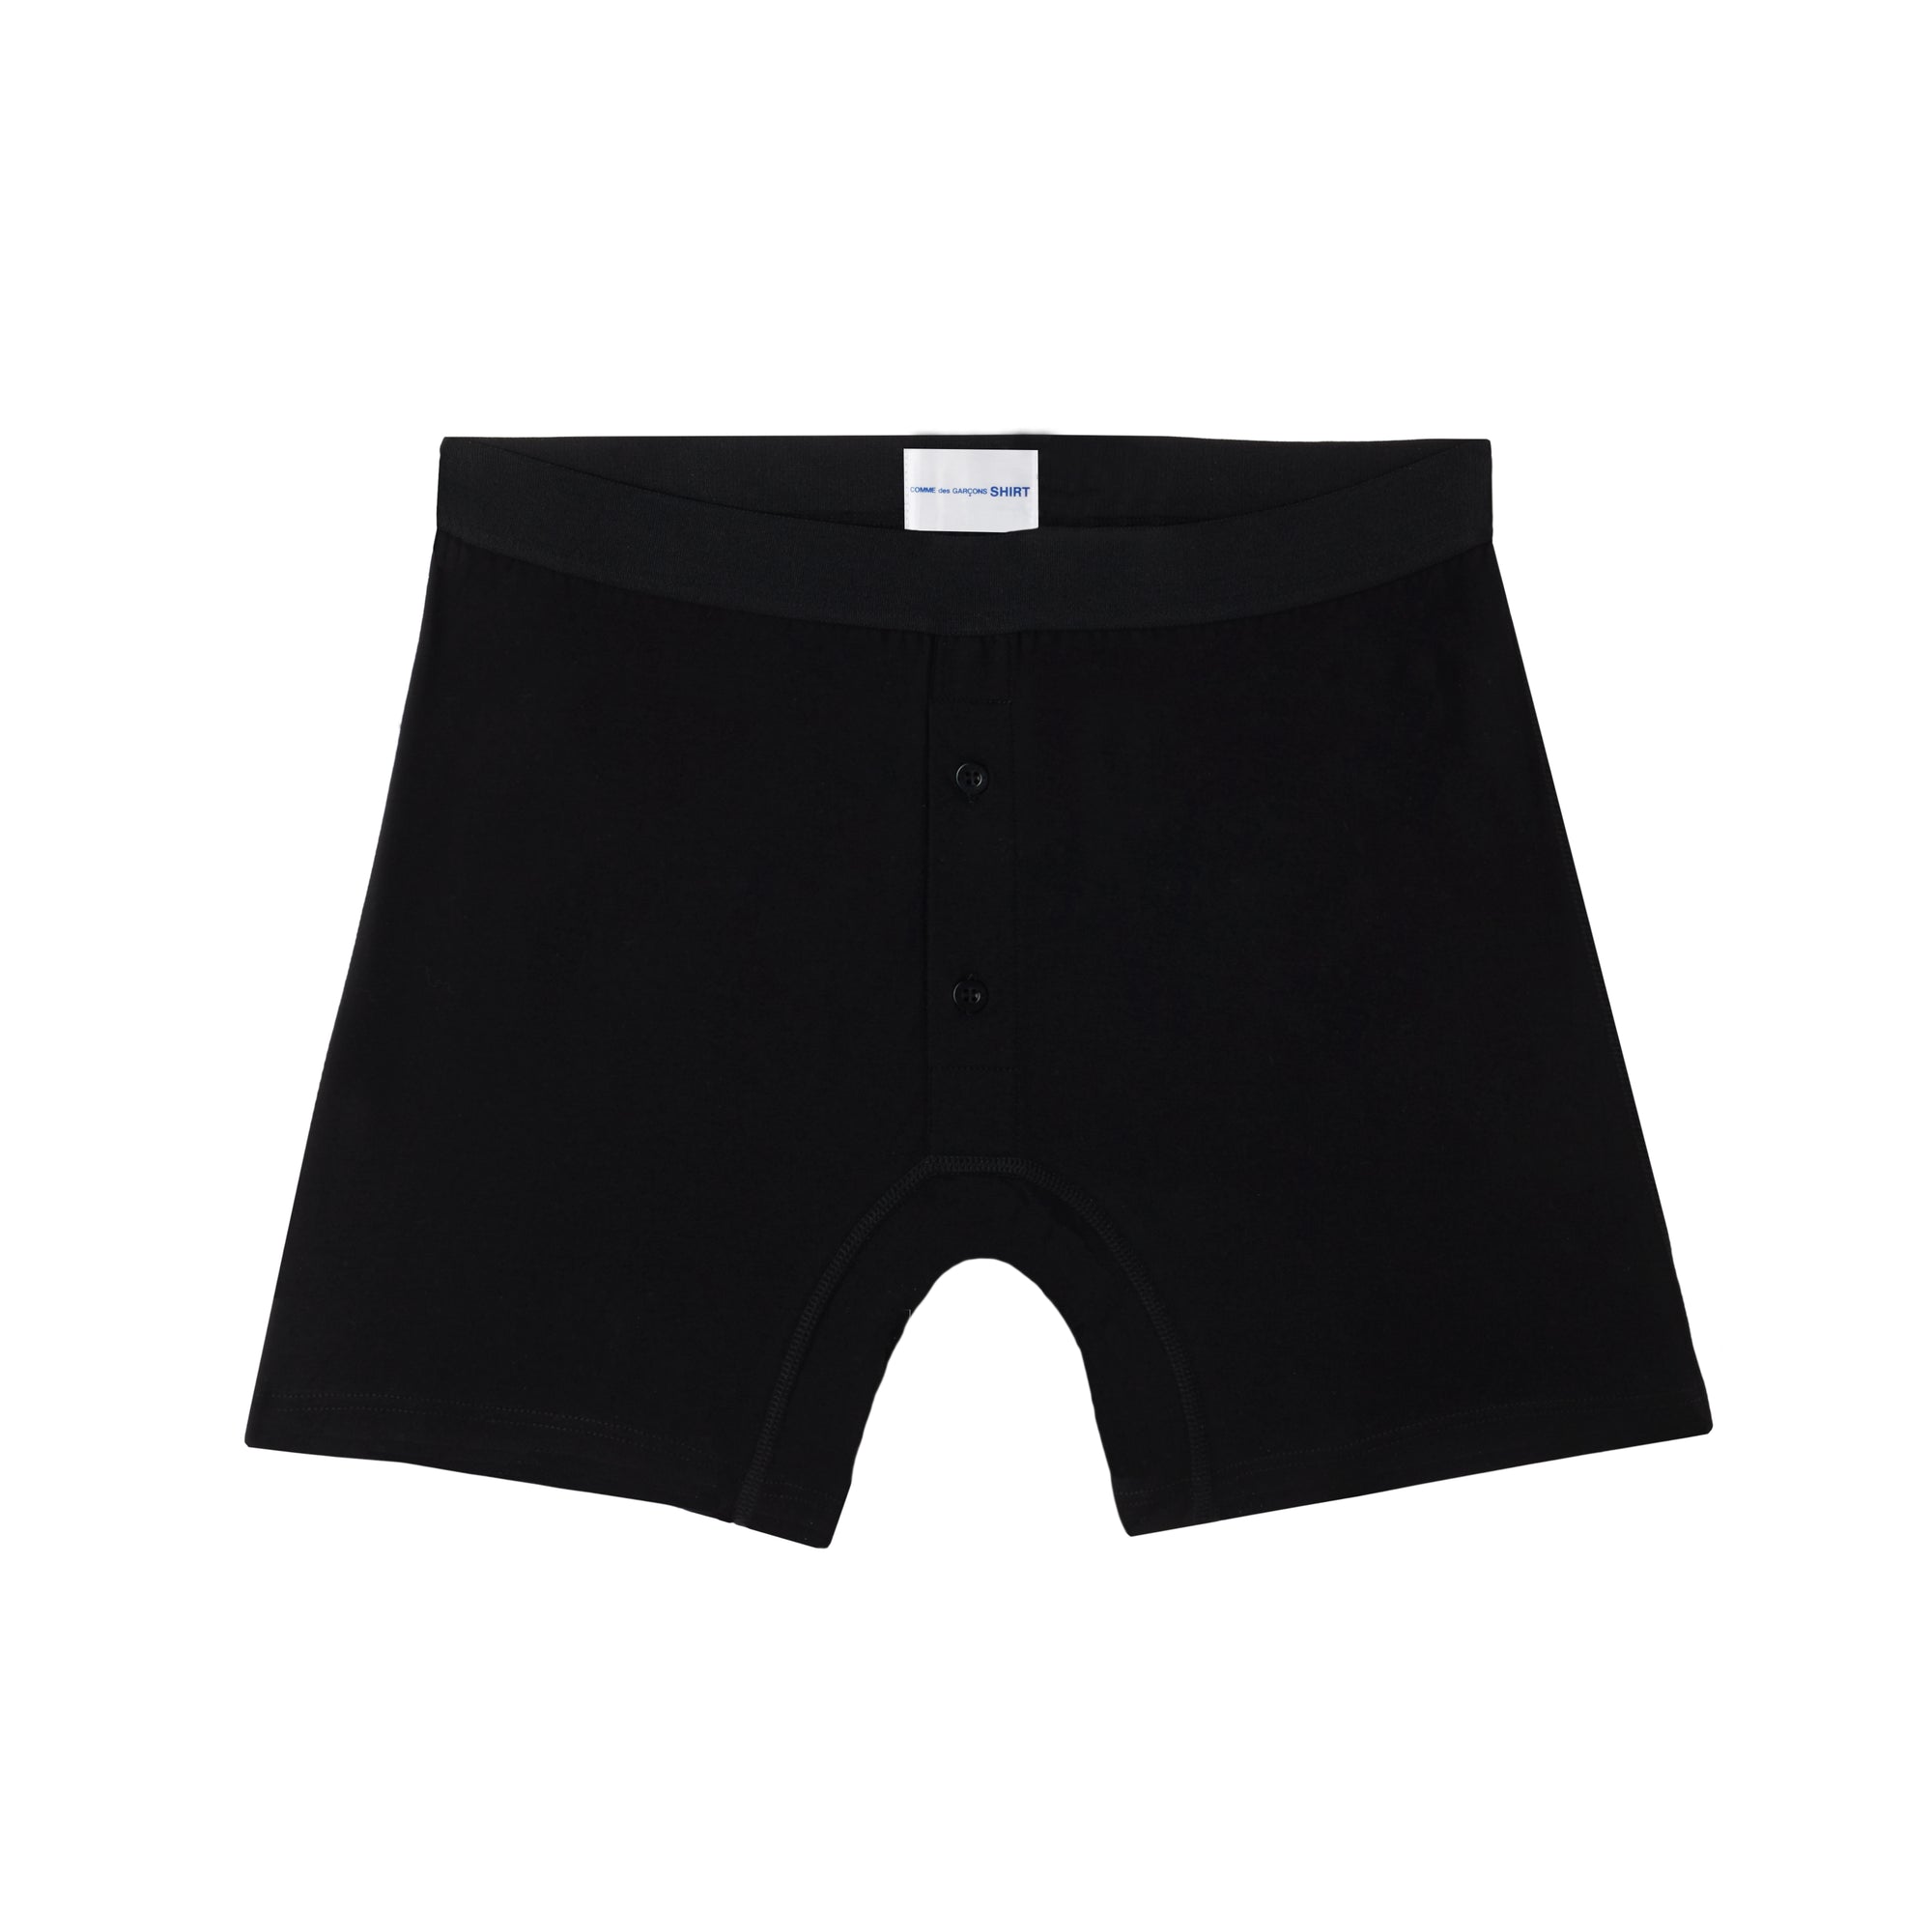 CDG SHIRT Underwear - Sunspel Two Button Boxer - (Black) view 1